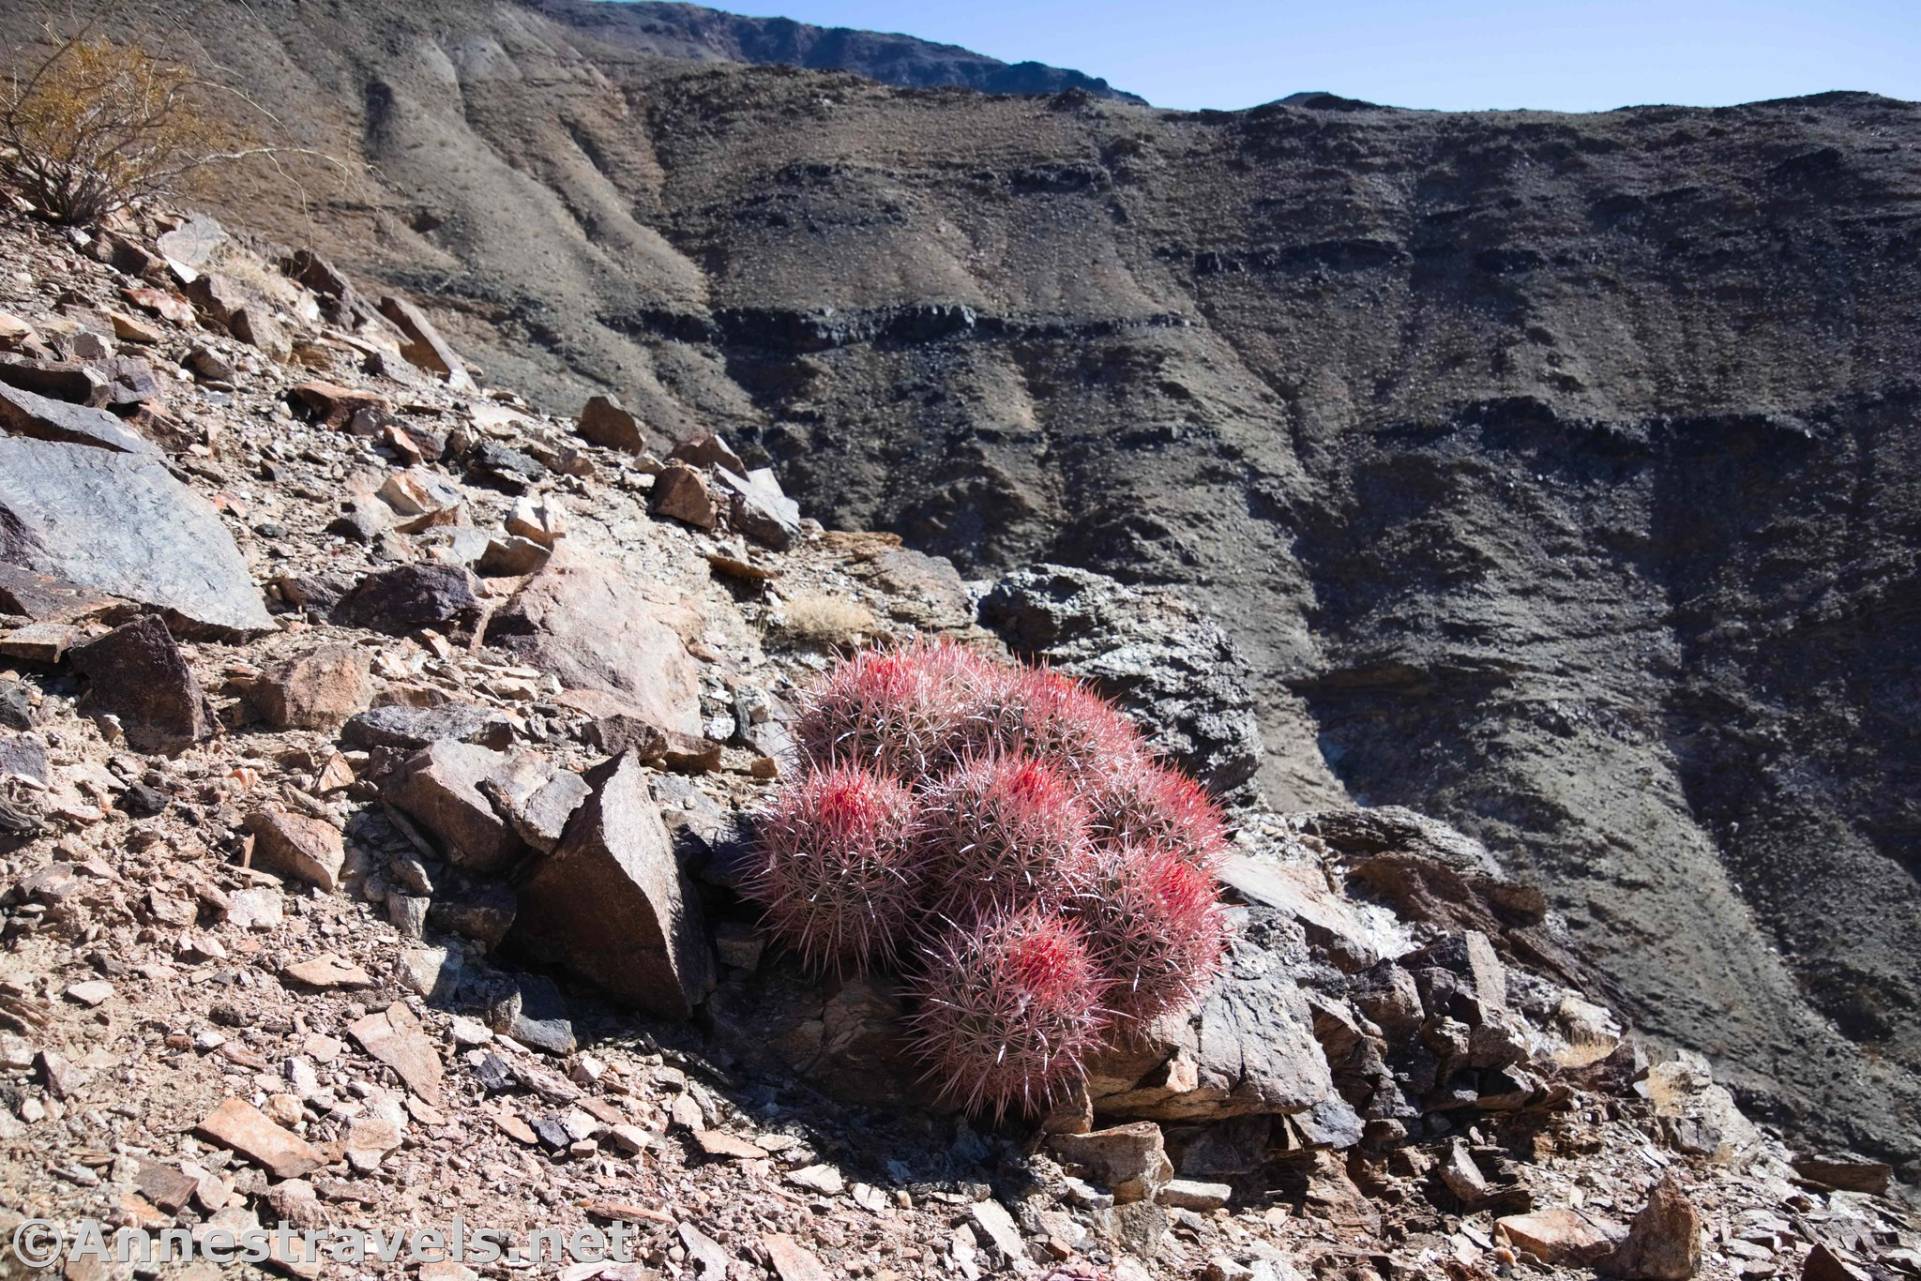 Cotton Top Cactus near the Keane Wonder Mine, Death Valley National Park, California